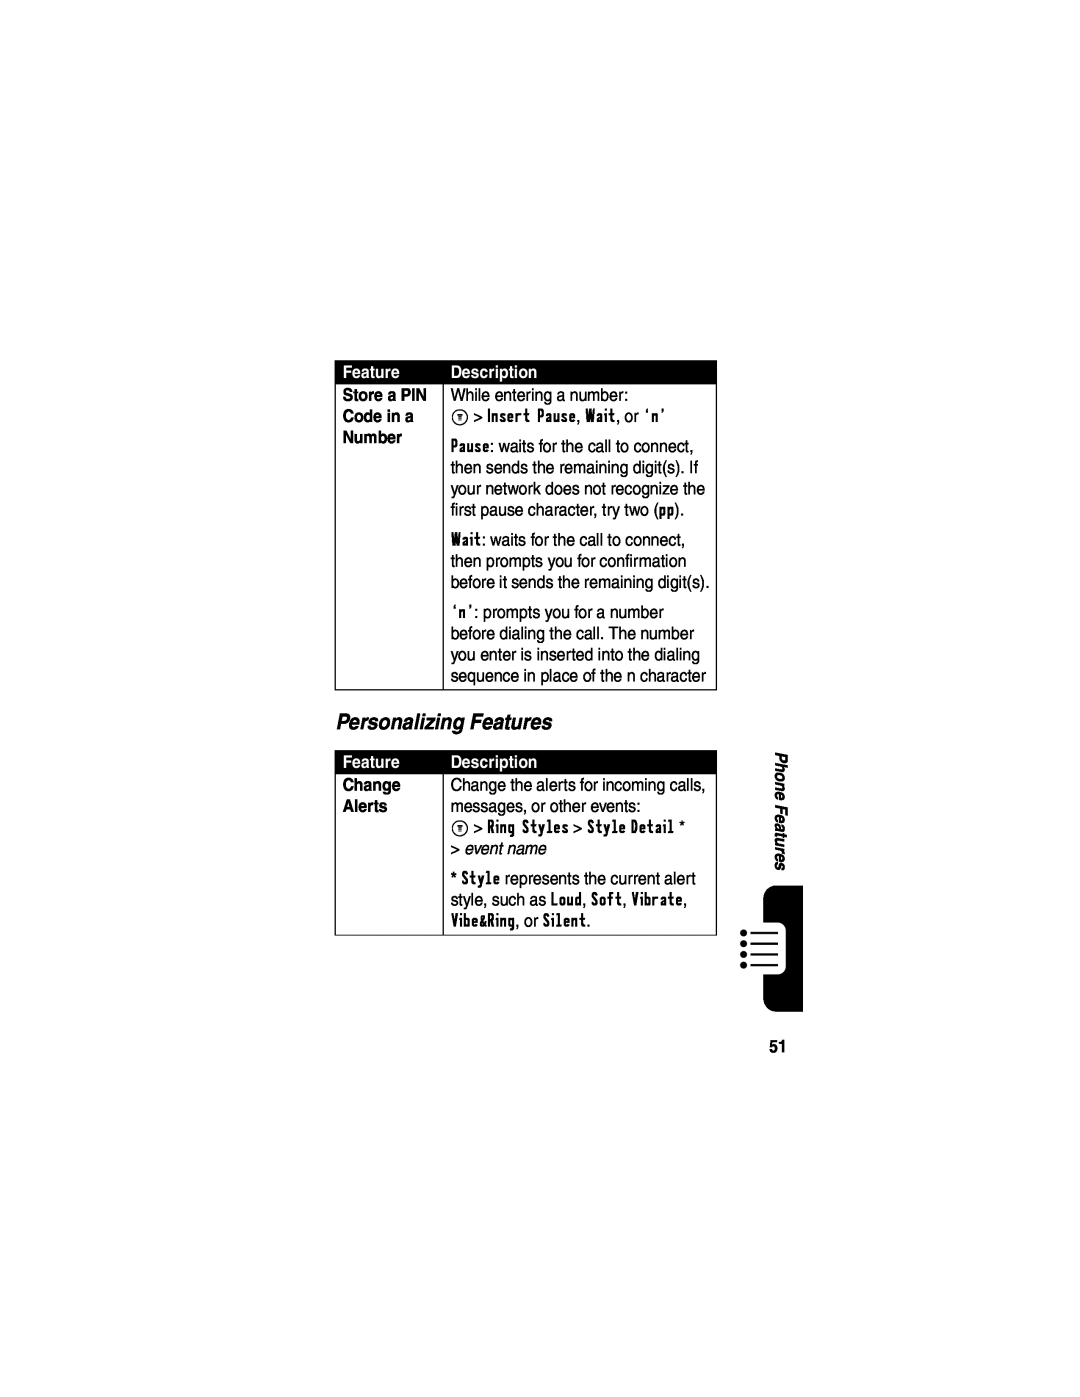 Motorola C341a, CDMA manual Personalizing Features, Description 